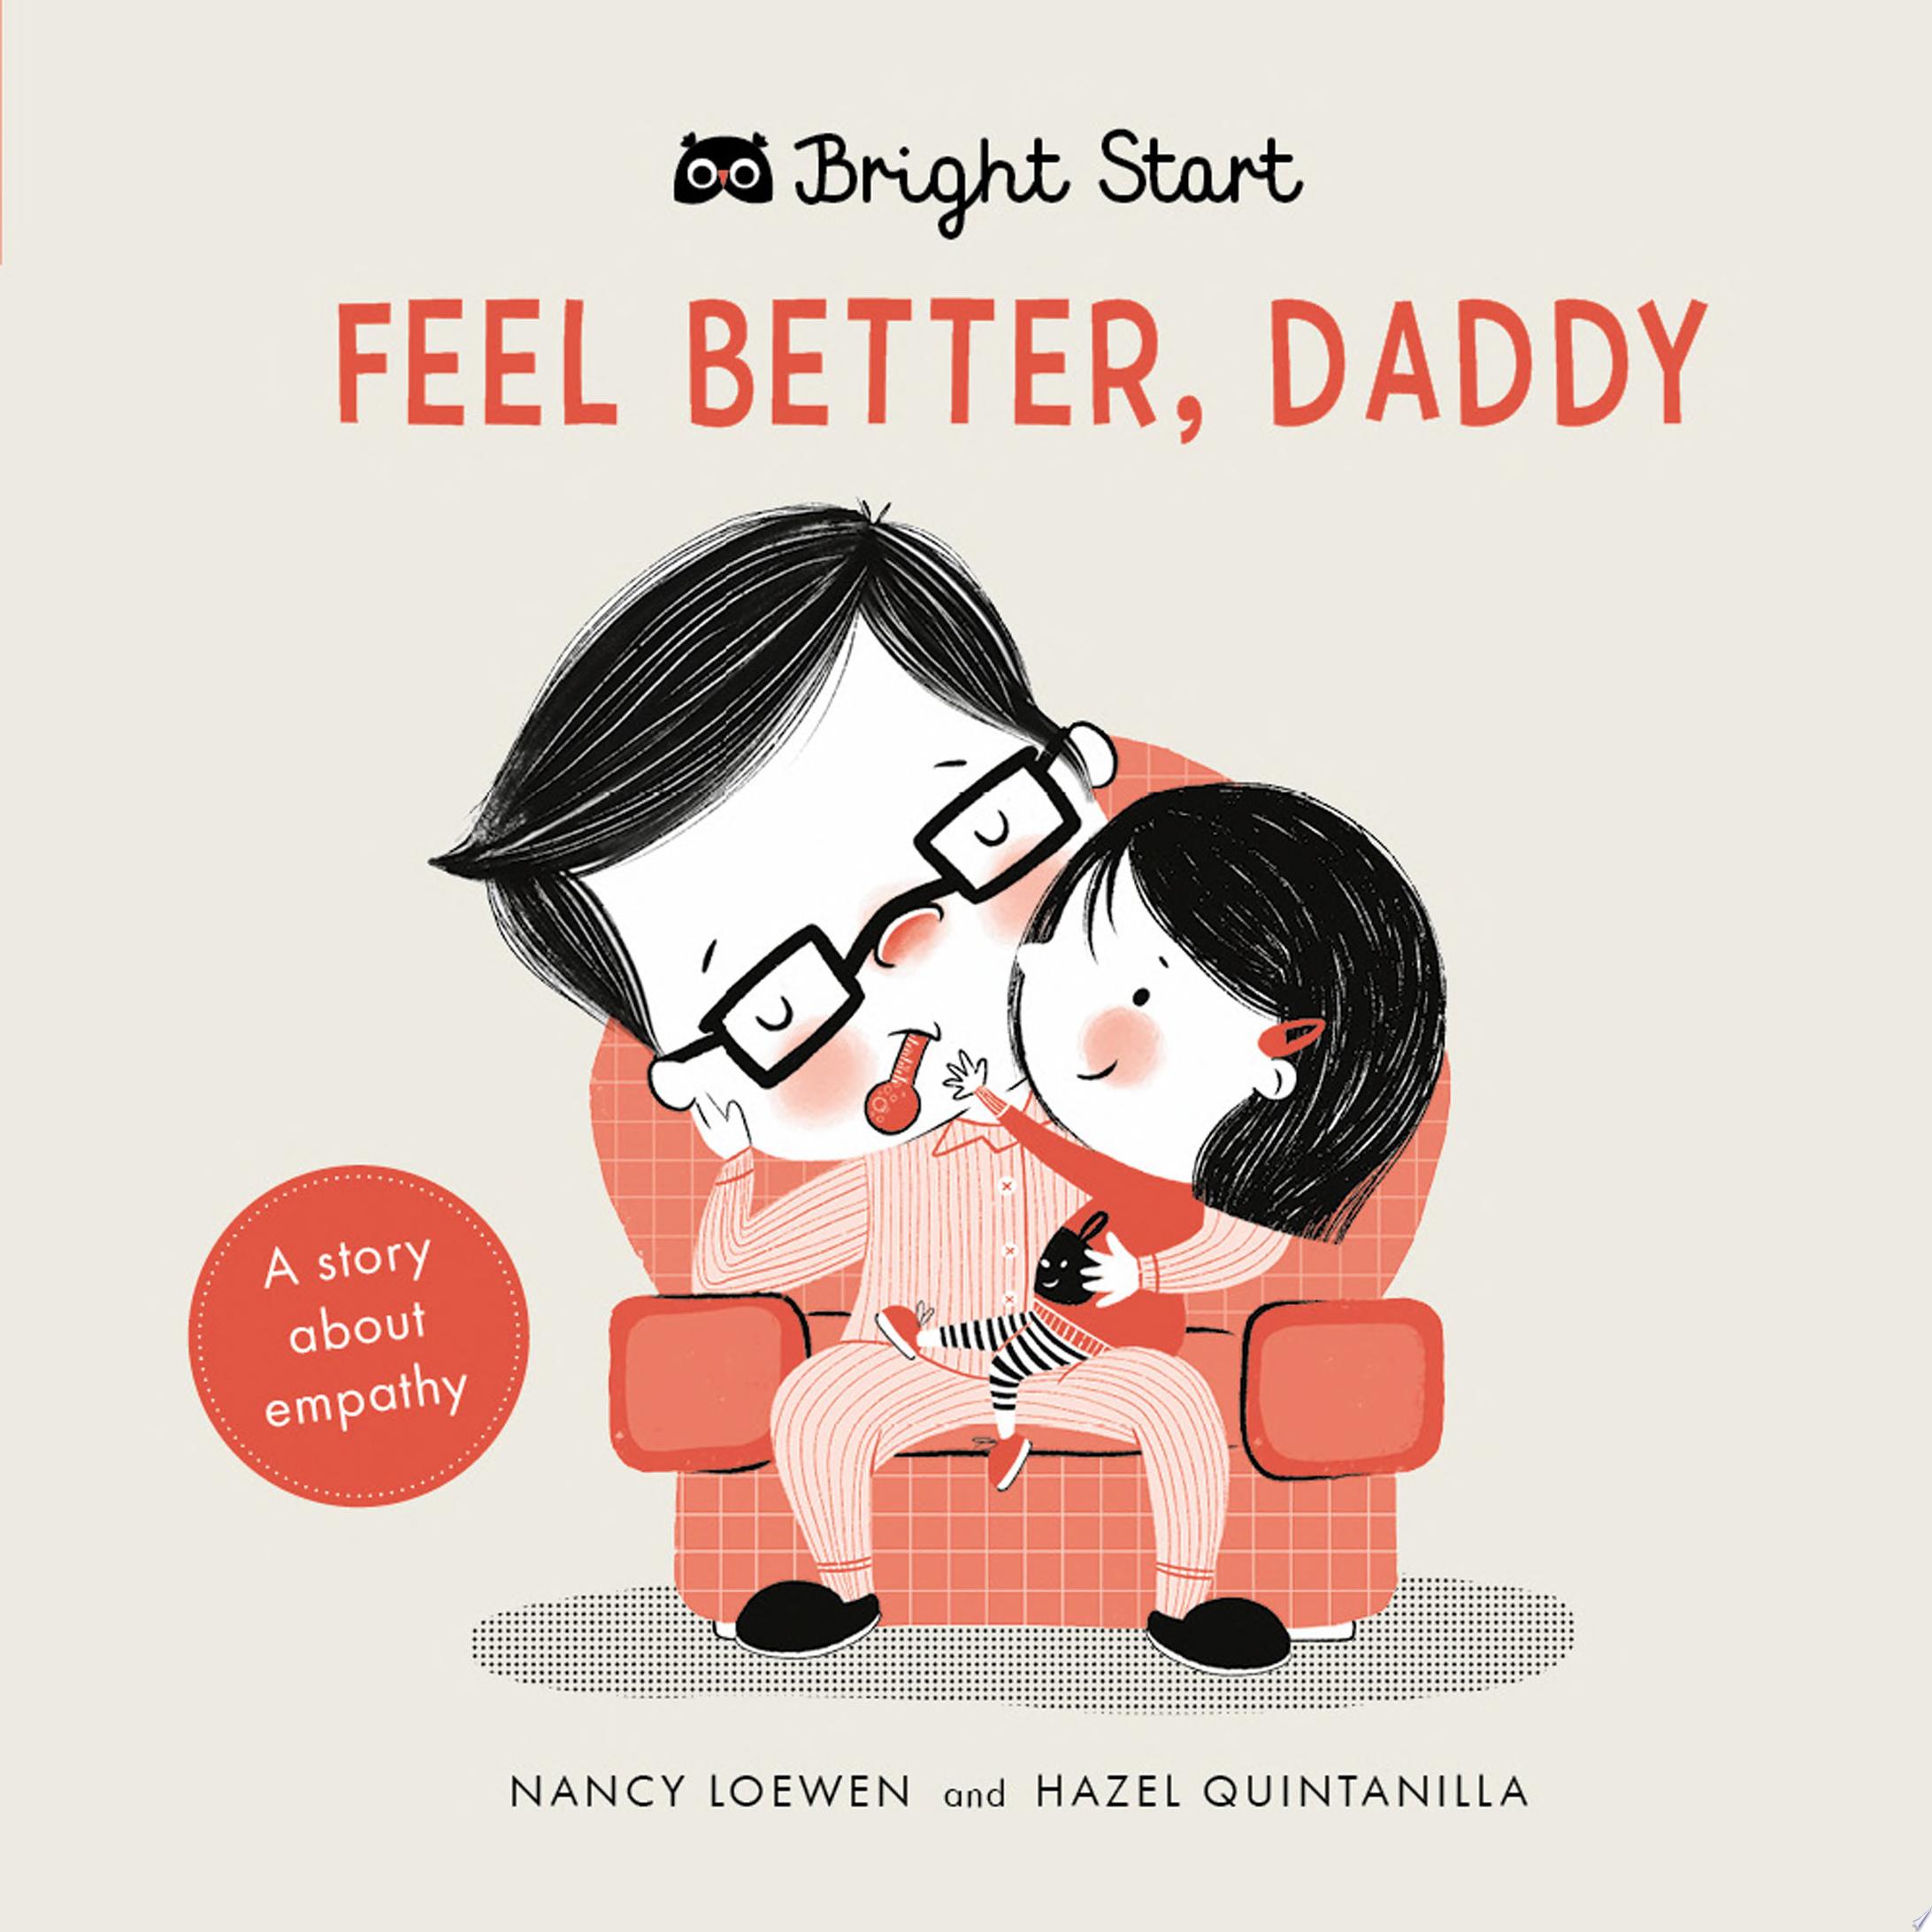 Image for "Bright Start - Feel Better Daddy"